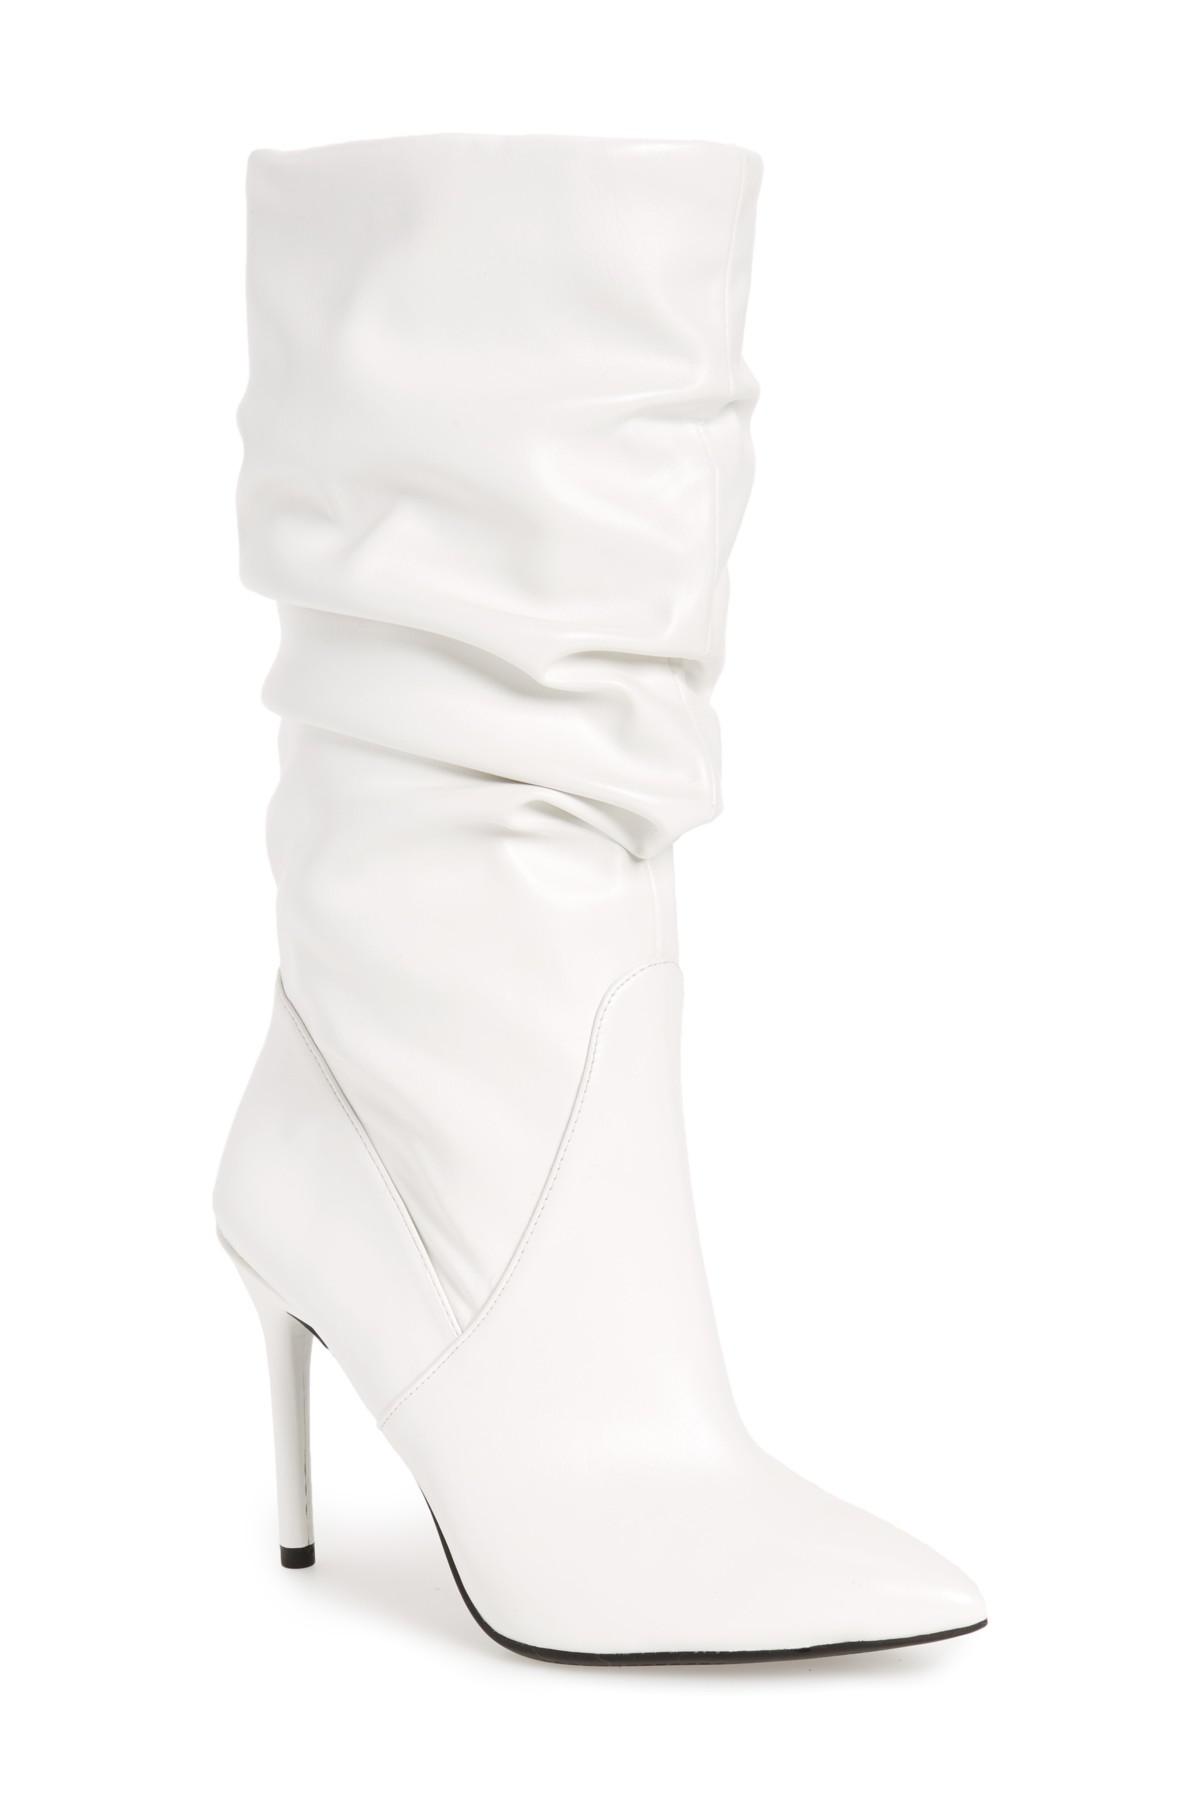 jessica simpson white boots